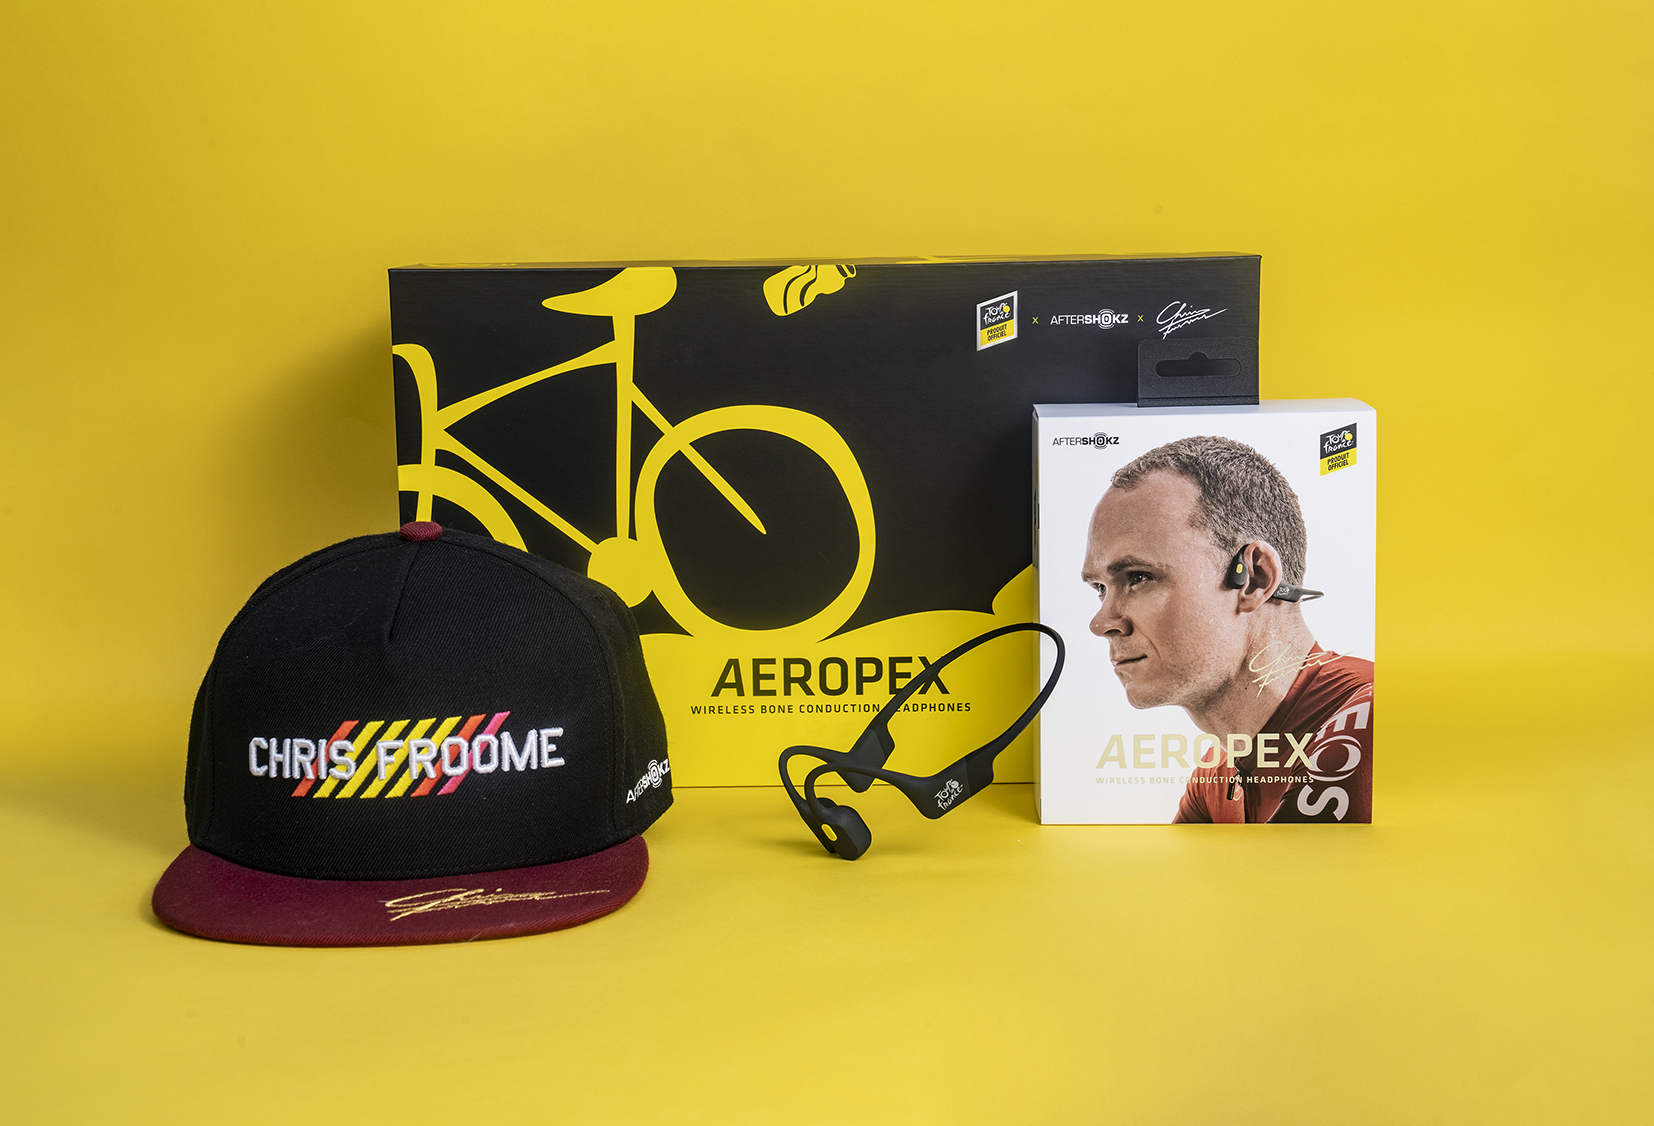 AfterShokz Aeropex環法自行車賽限量聯名款精緻禮盒包裝